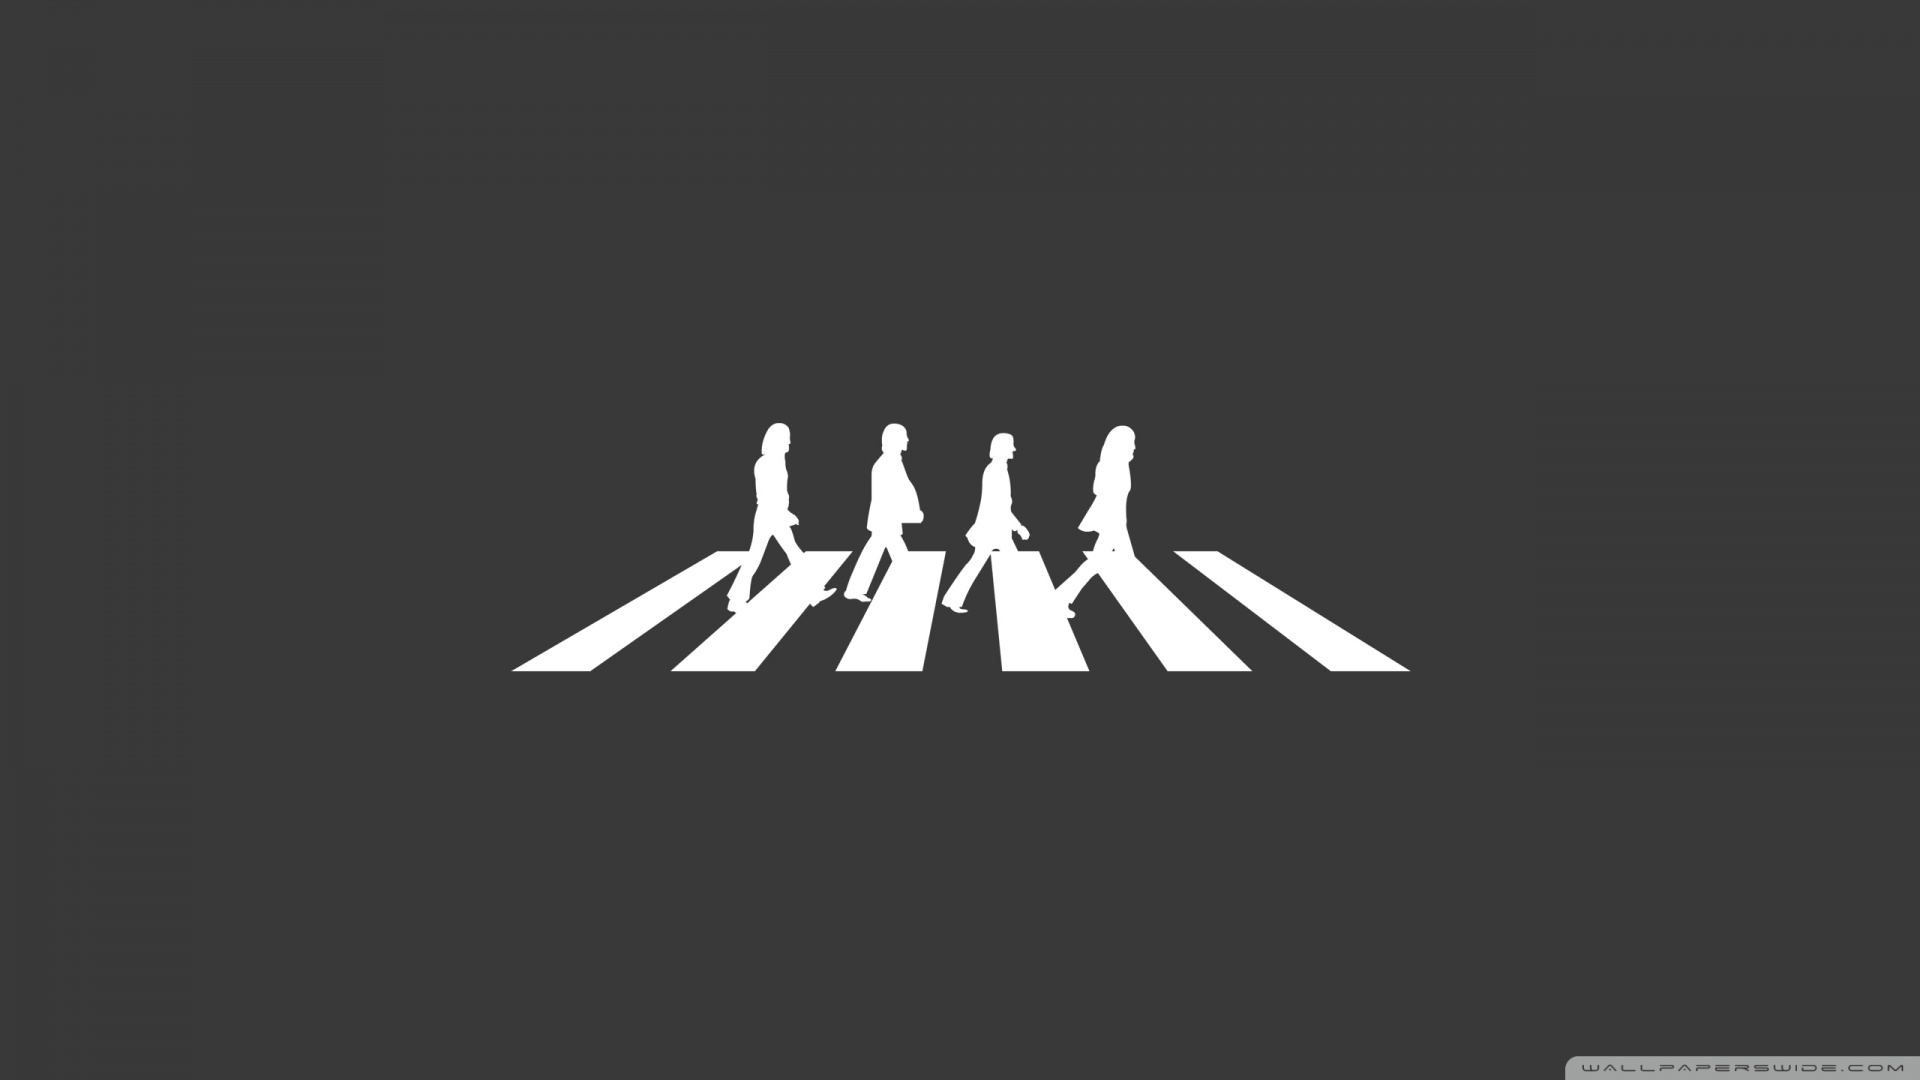 Beatles Abbey Road Wallpaper